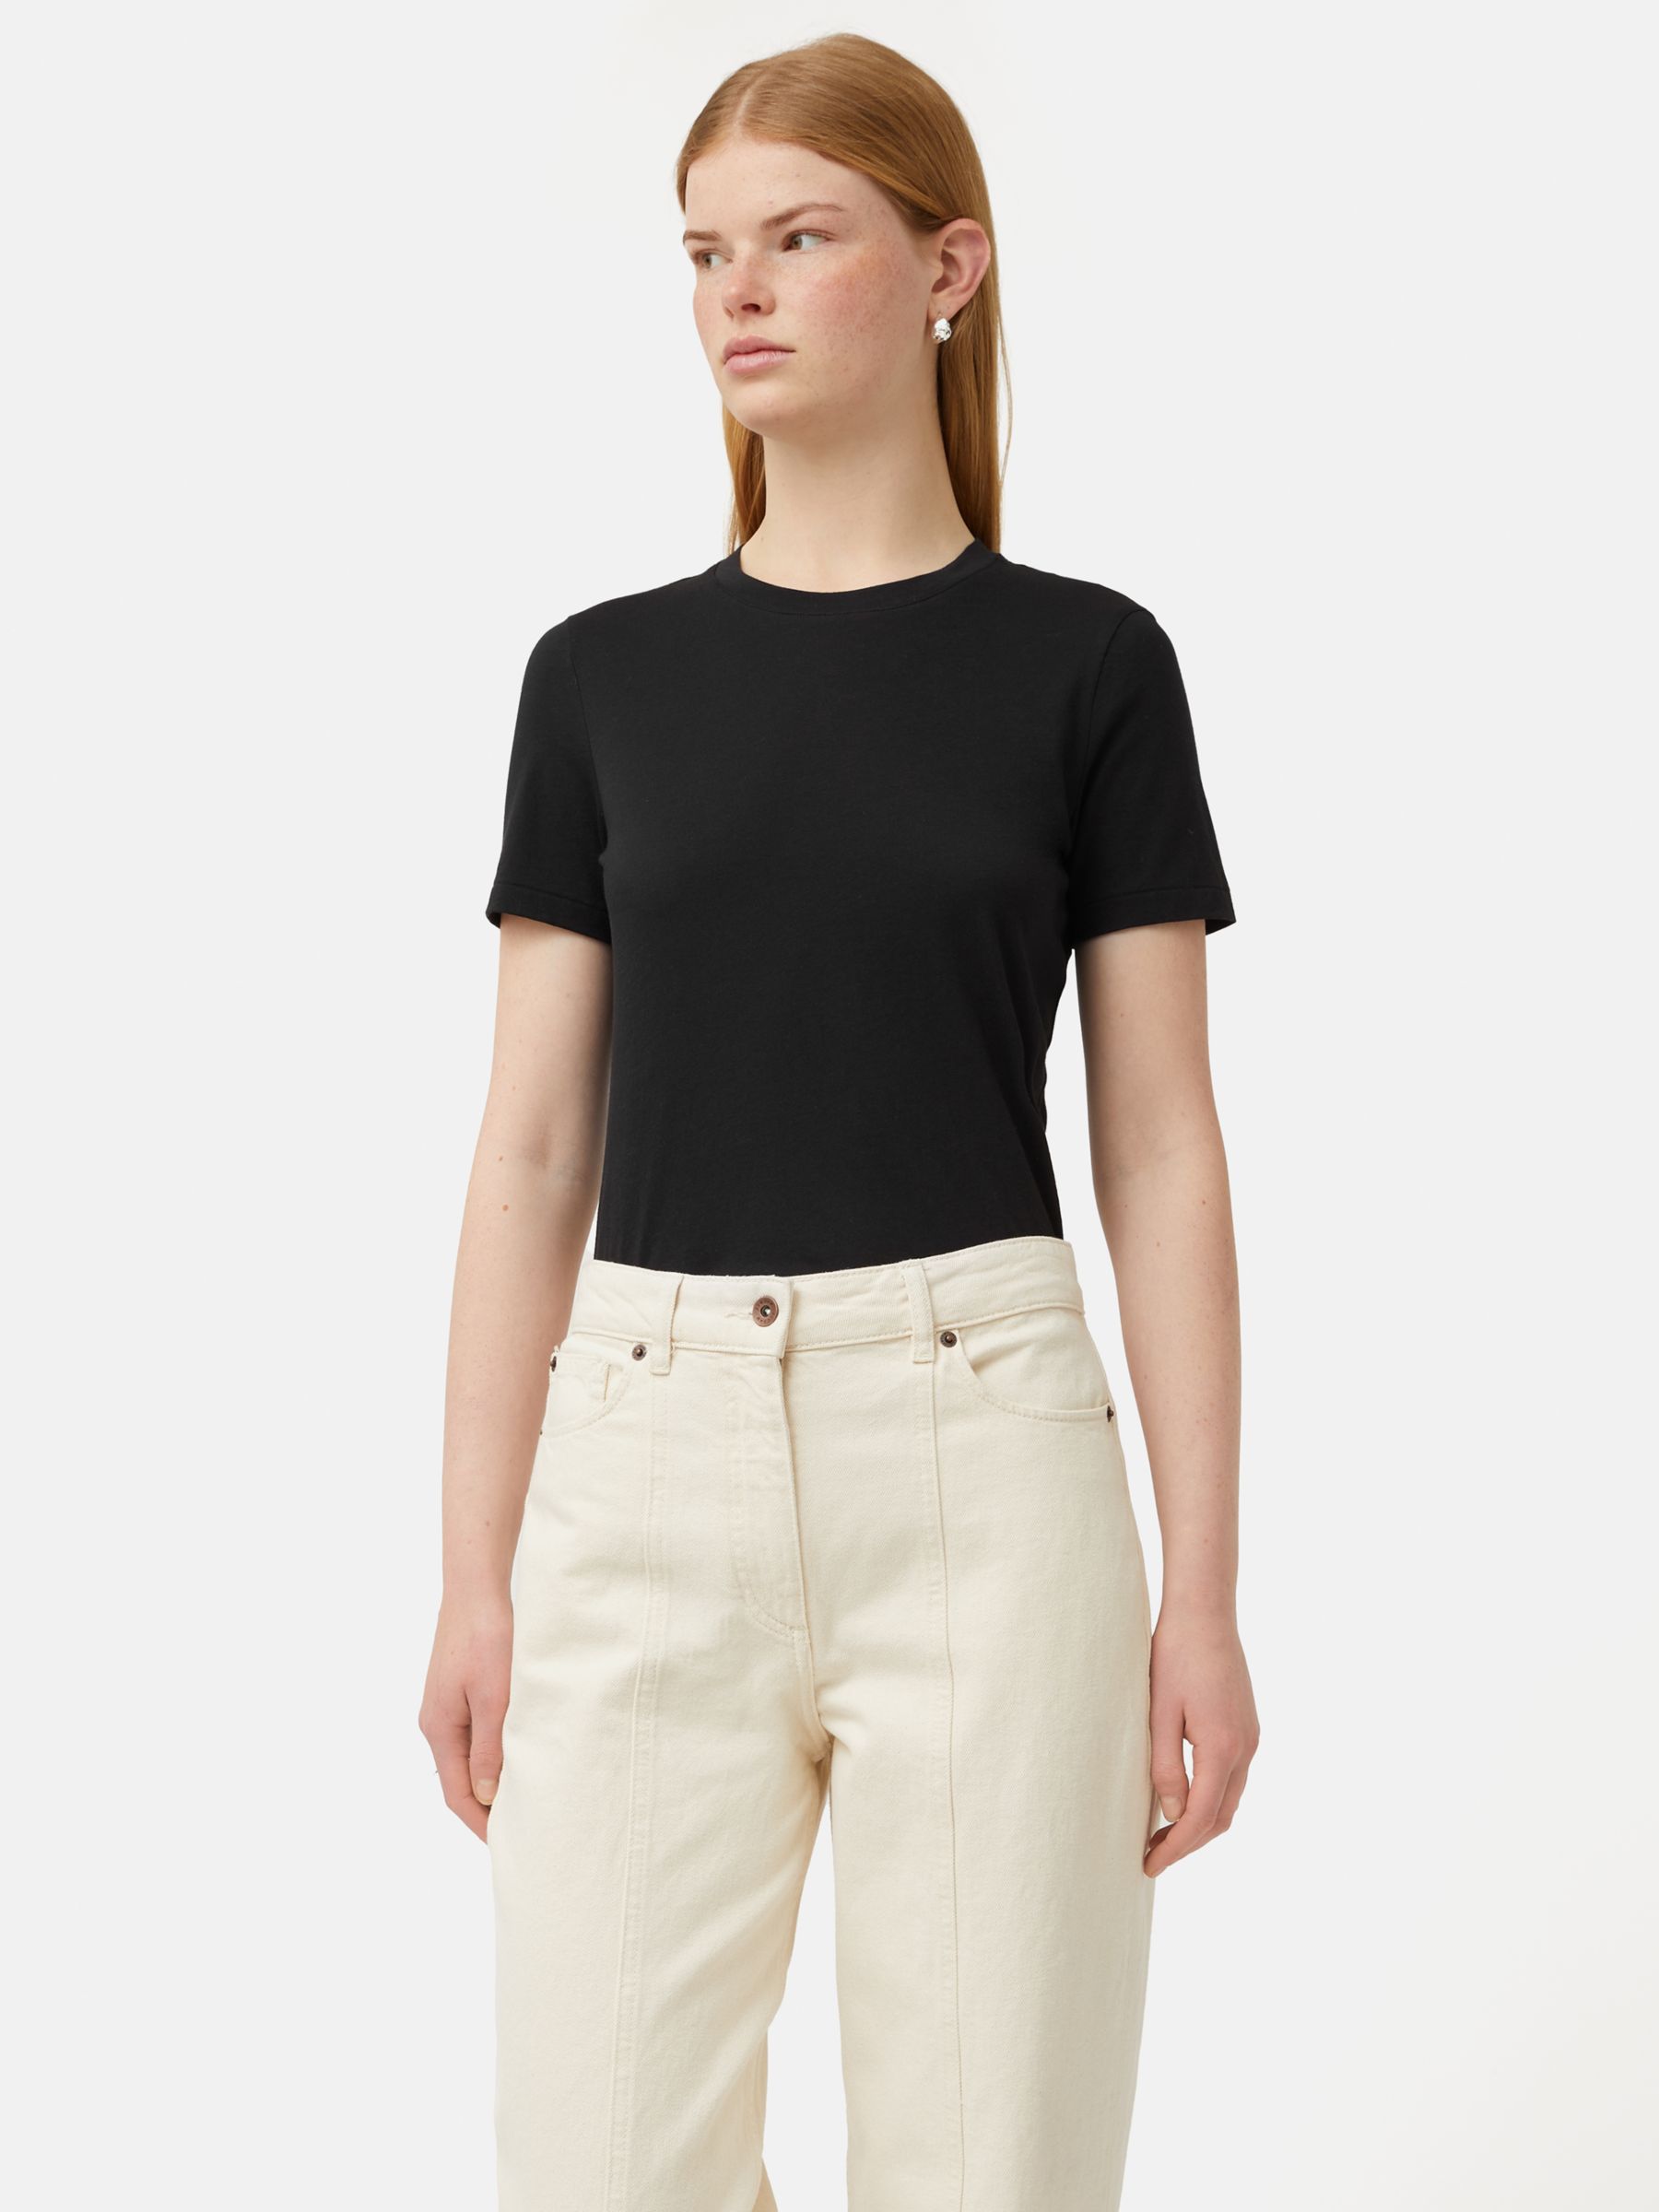 Jigsaw Supima Cotton Crew Neck T-Shirt, Black, XS